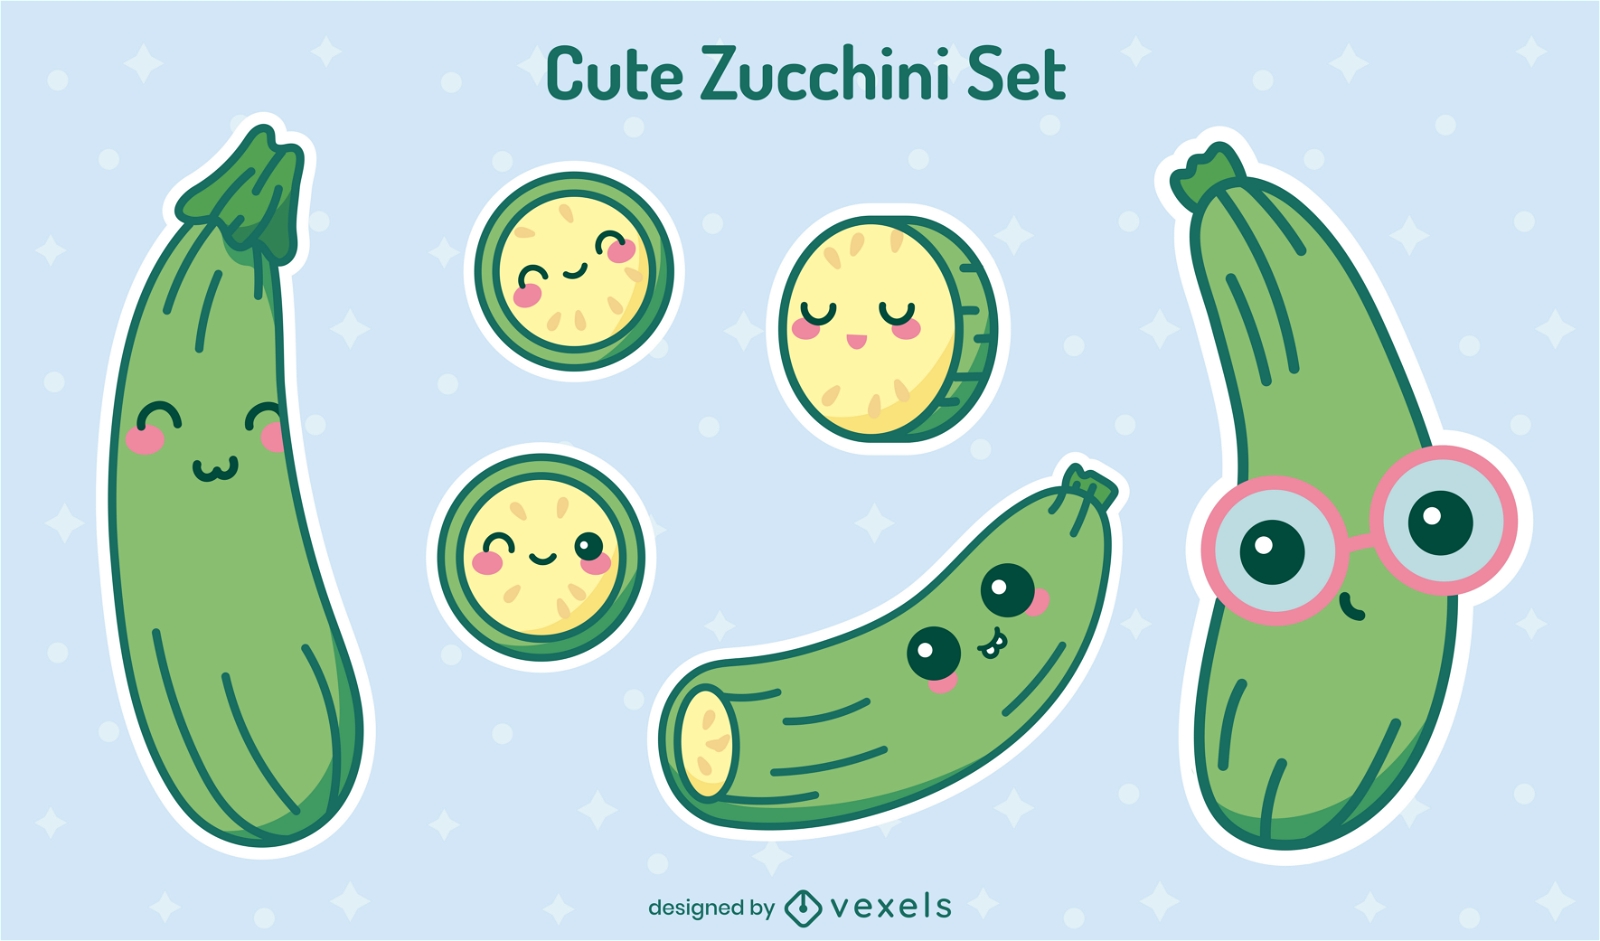 Cute zucchini character set